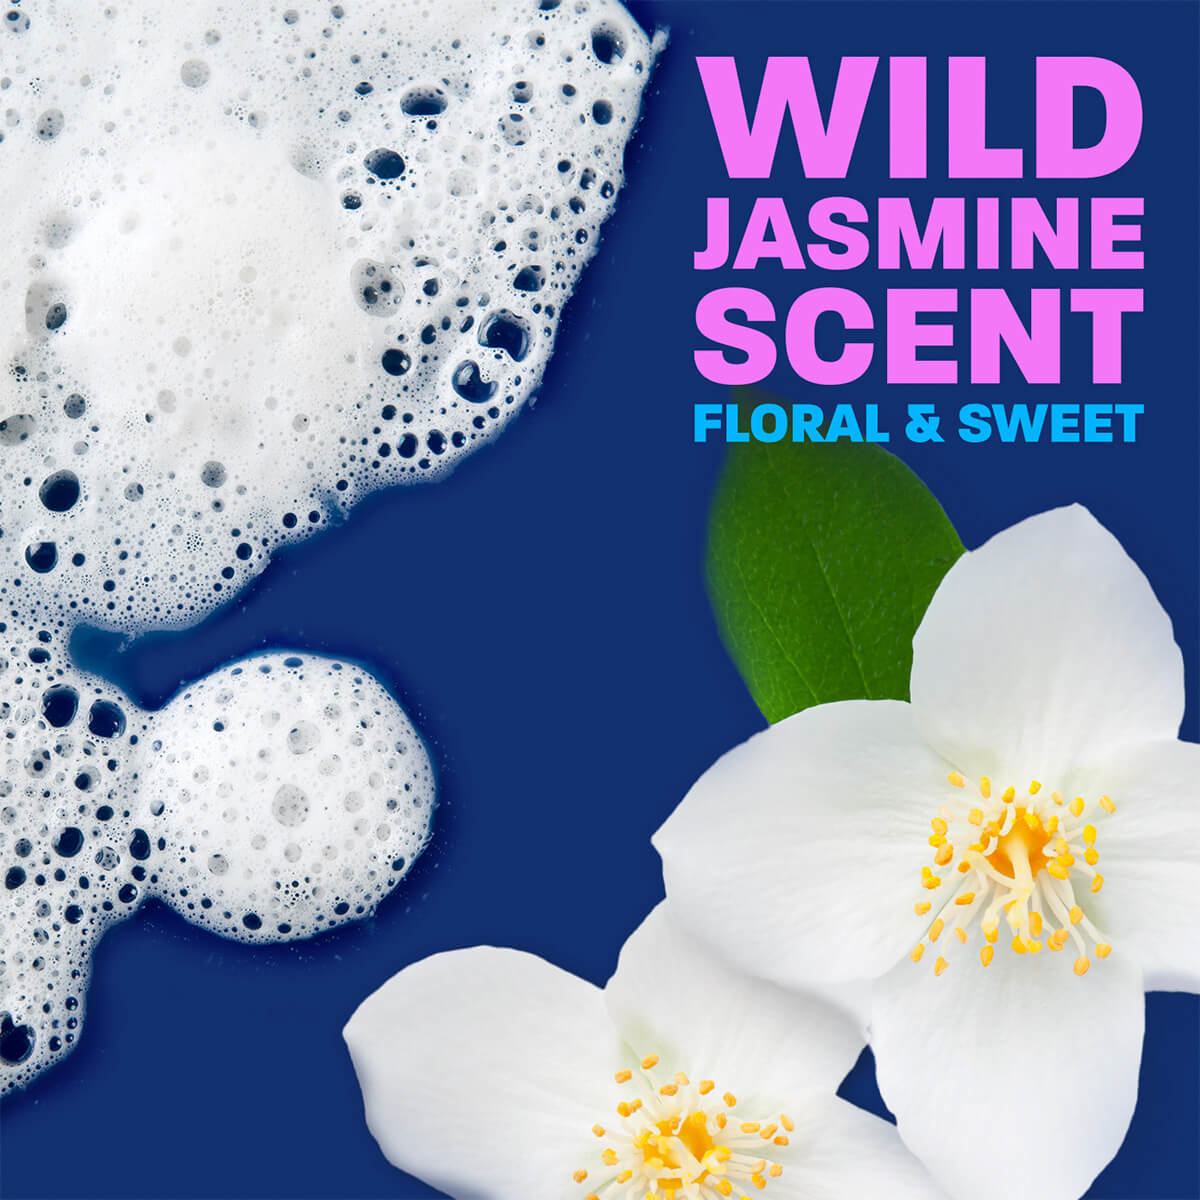 Wild Jasmine scent floral & sweet